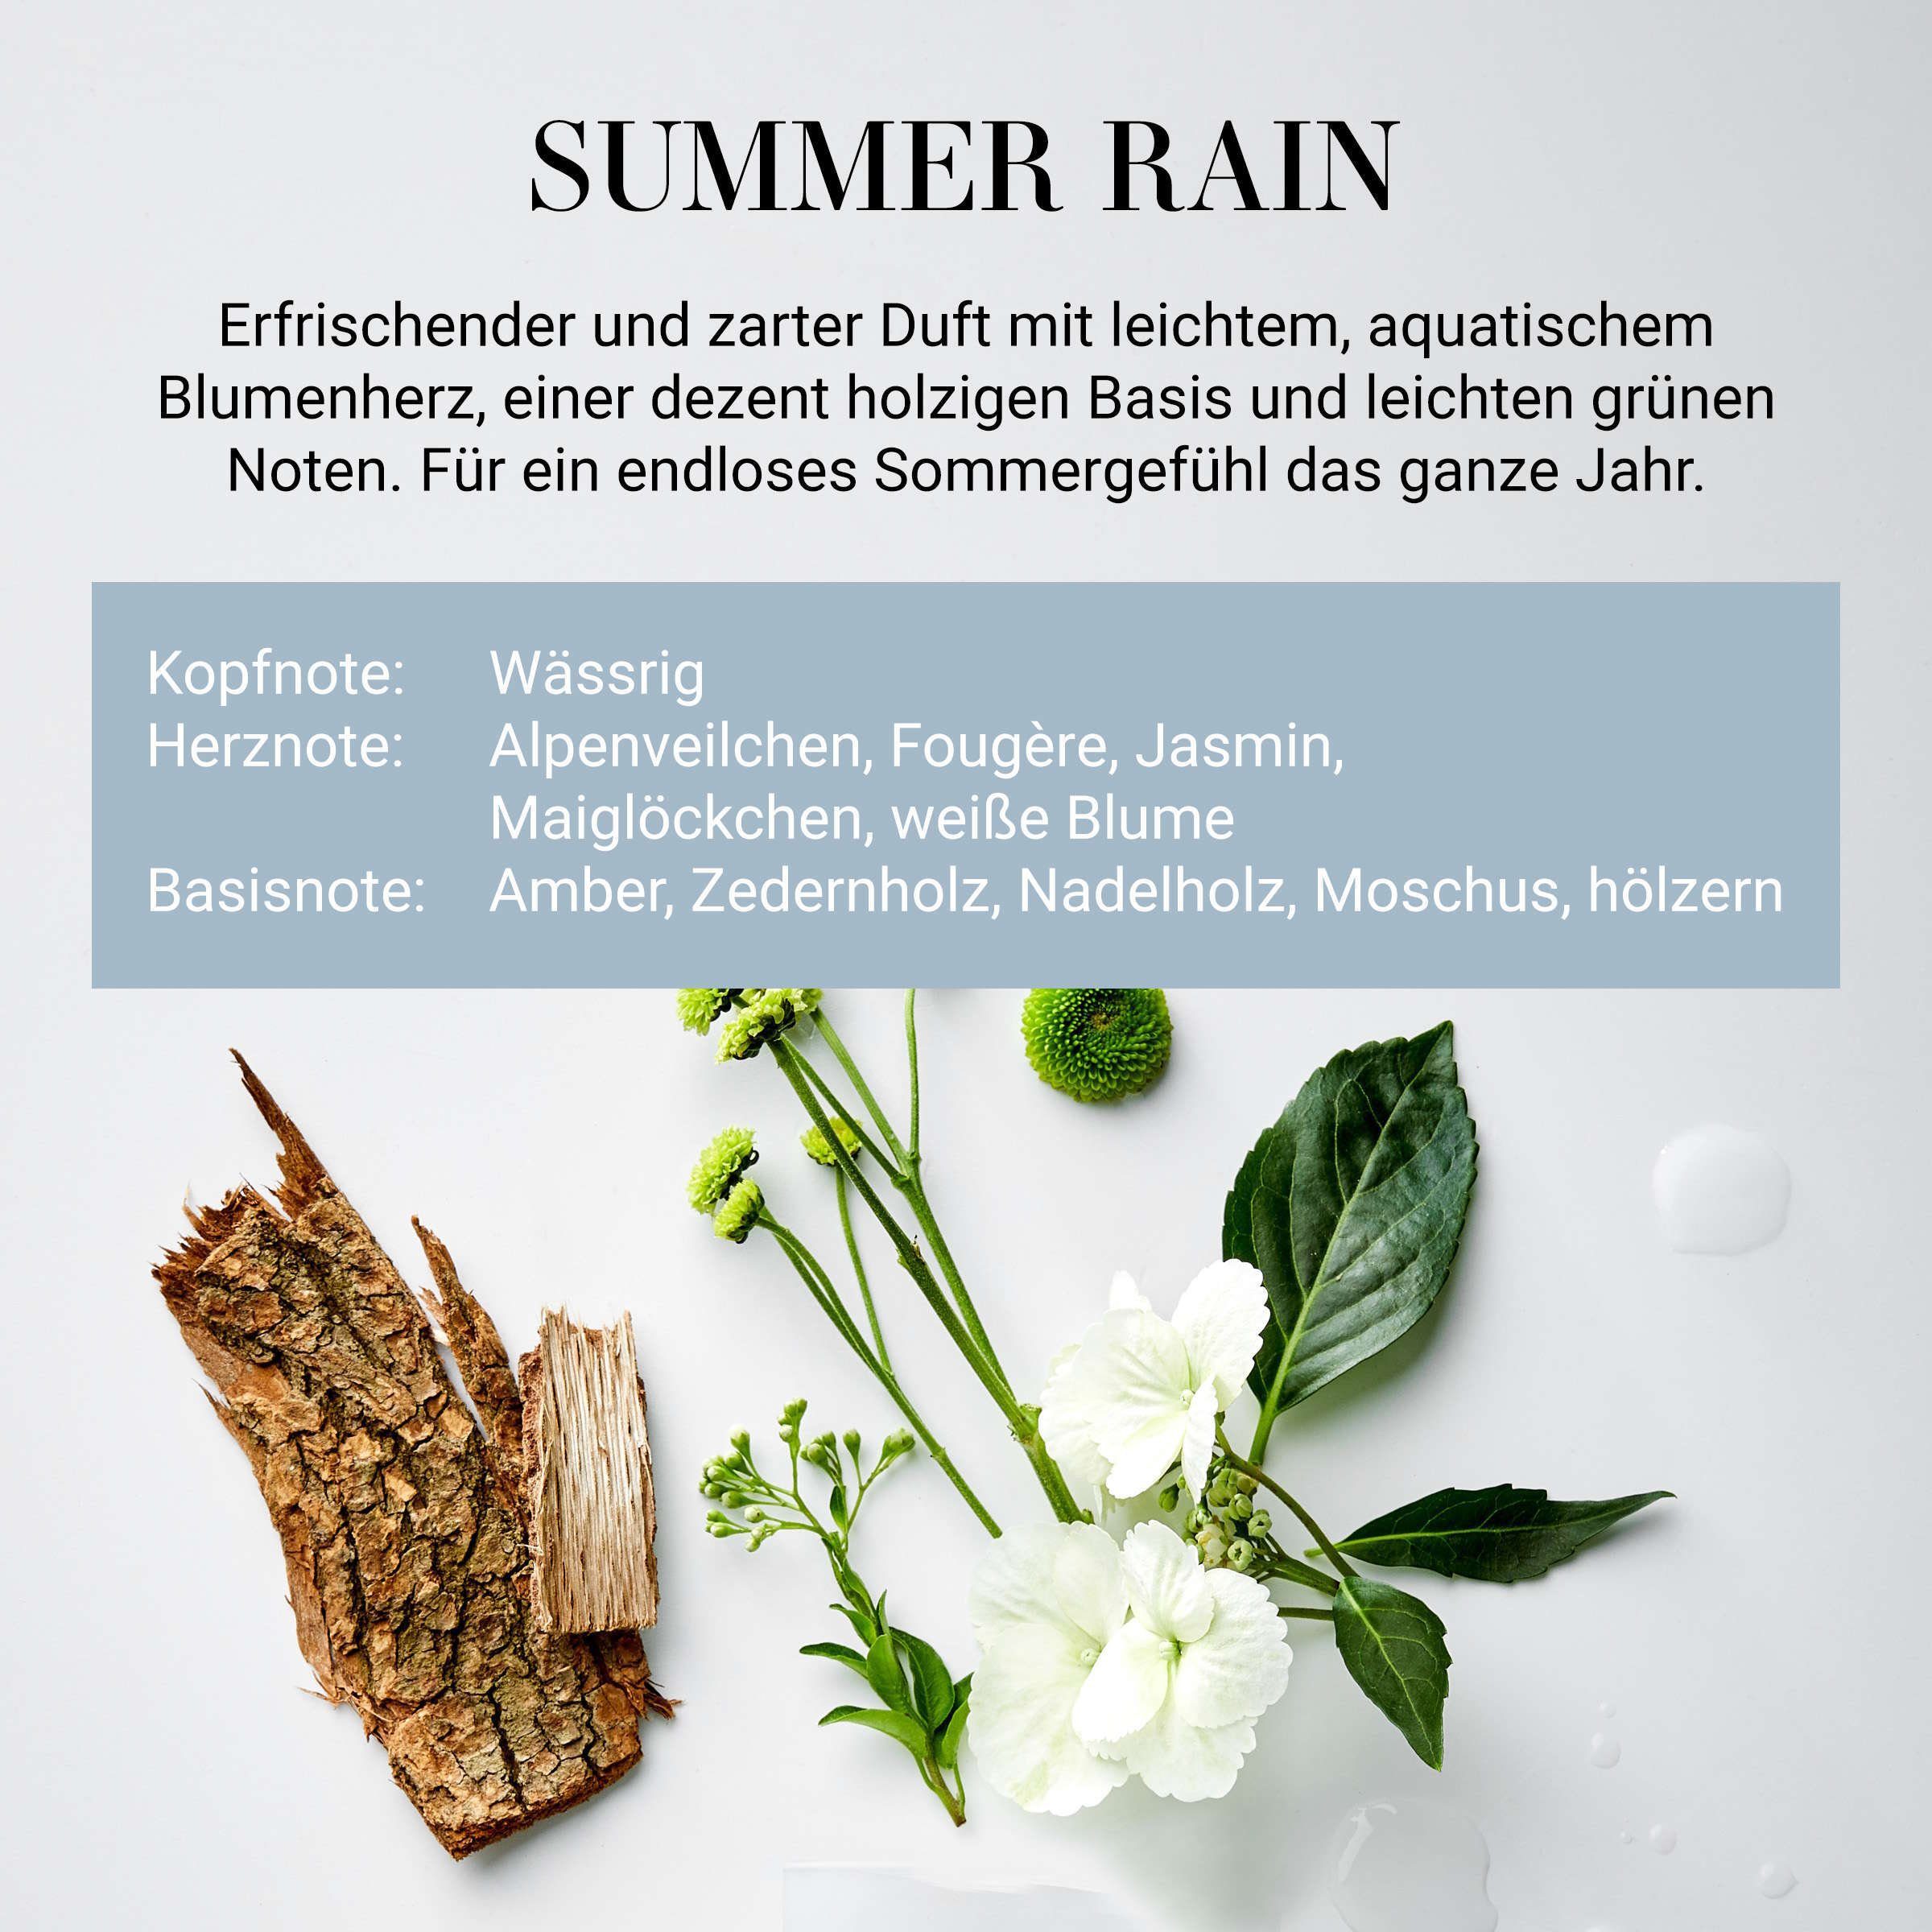 110ml "Summer SOUL BUTLERS HOME Raumduft No Duftlampe Rain" & 2